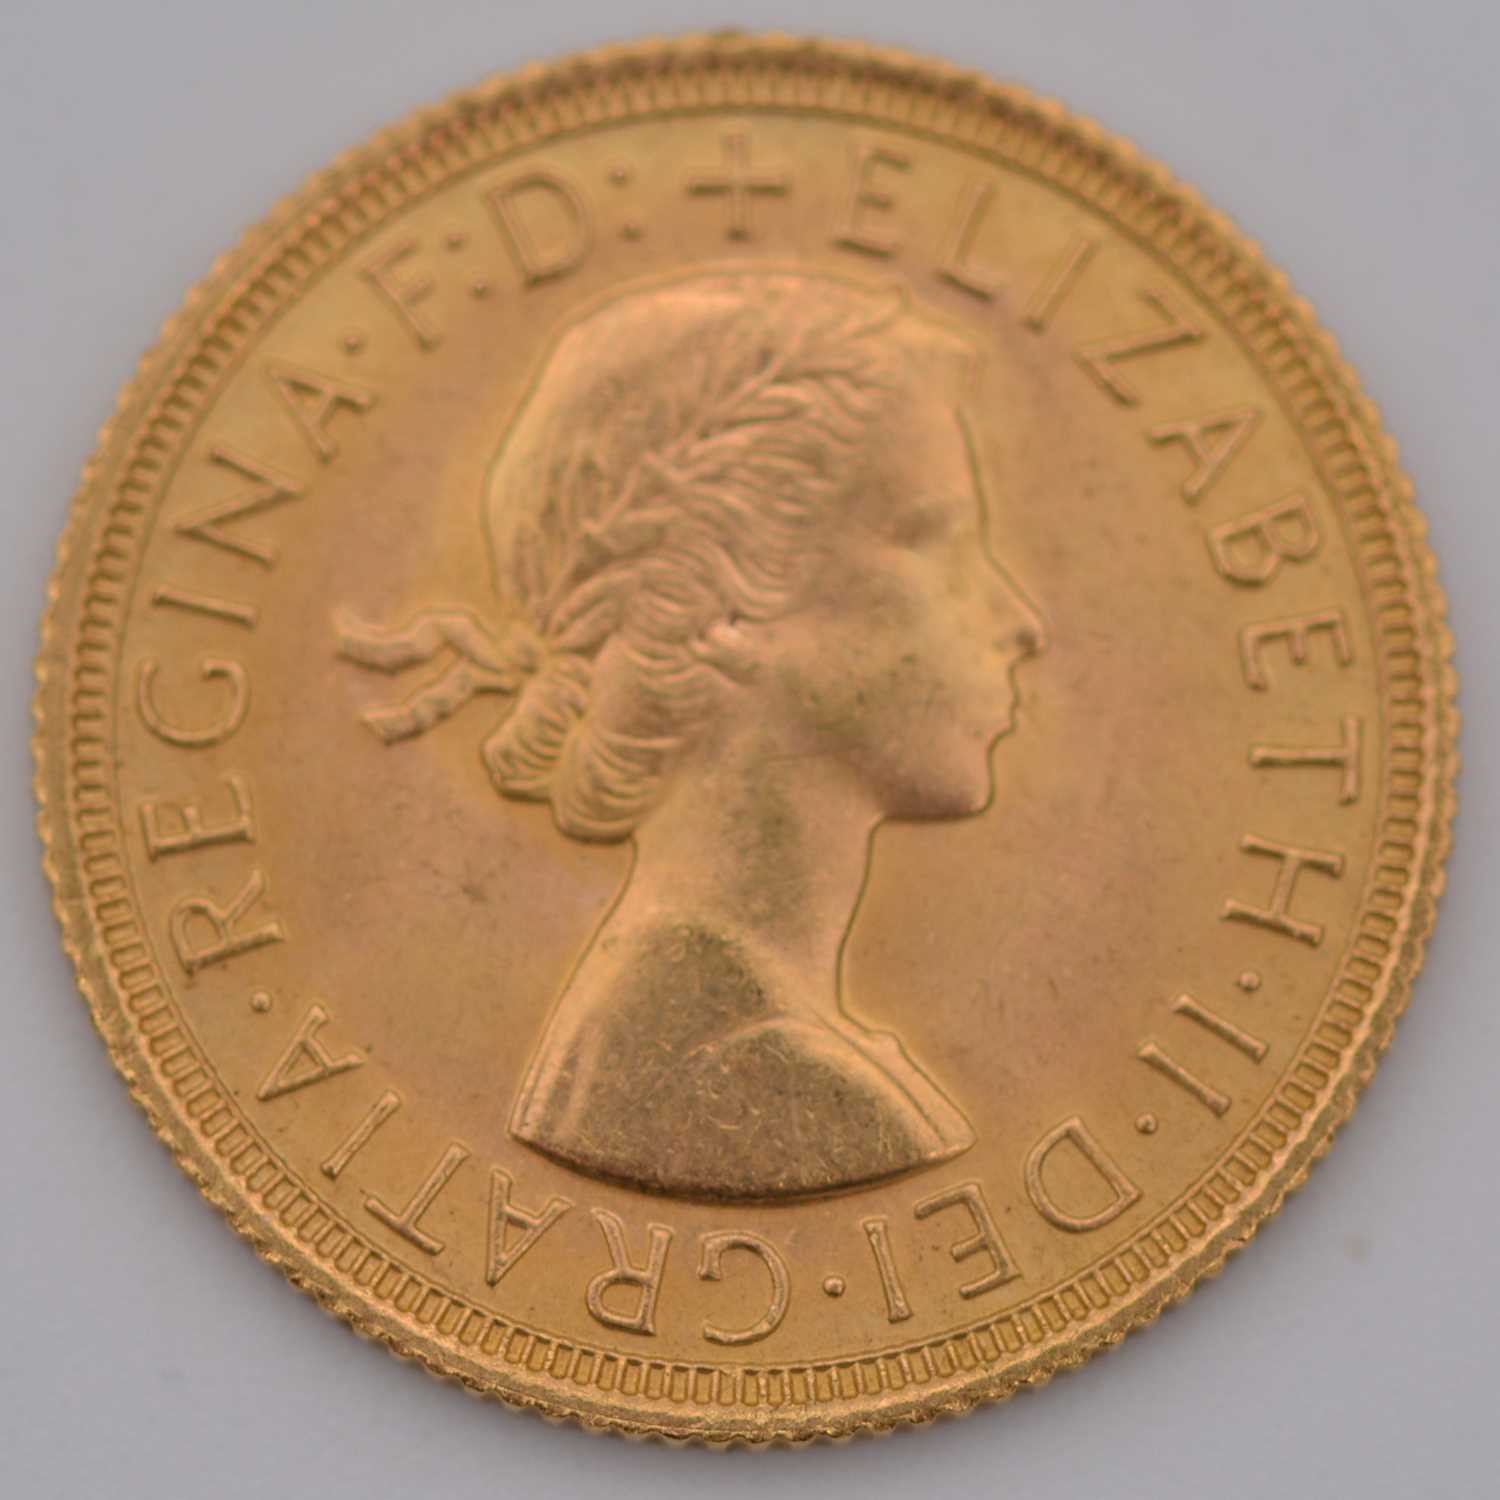 Elizabeth II gold Sovereign coin, 1967, 8g. - Image 2 of 2